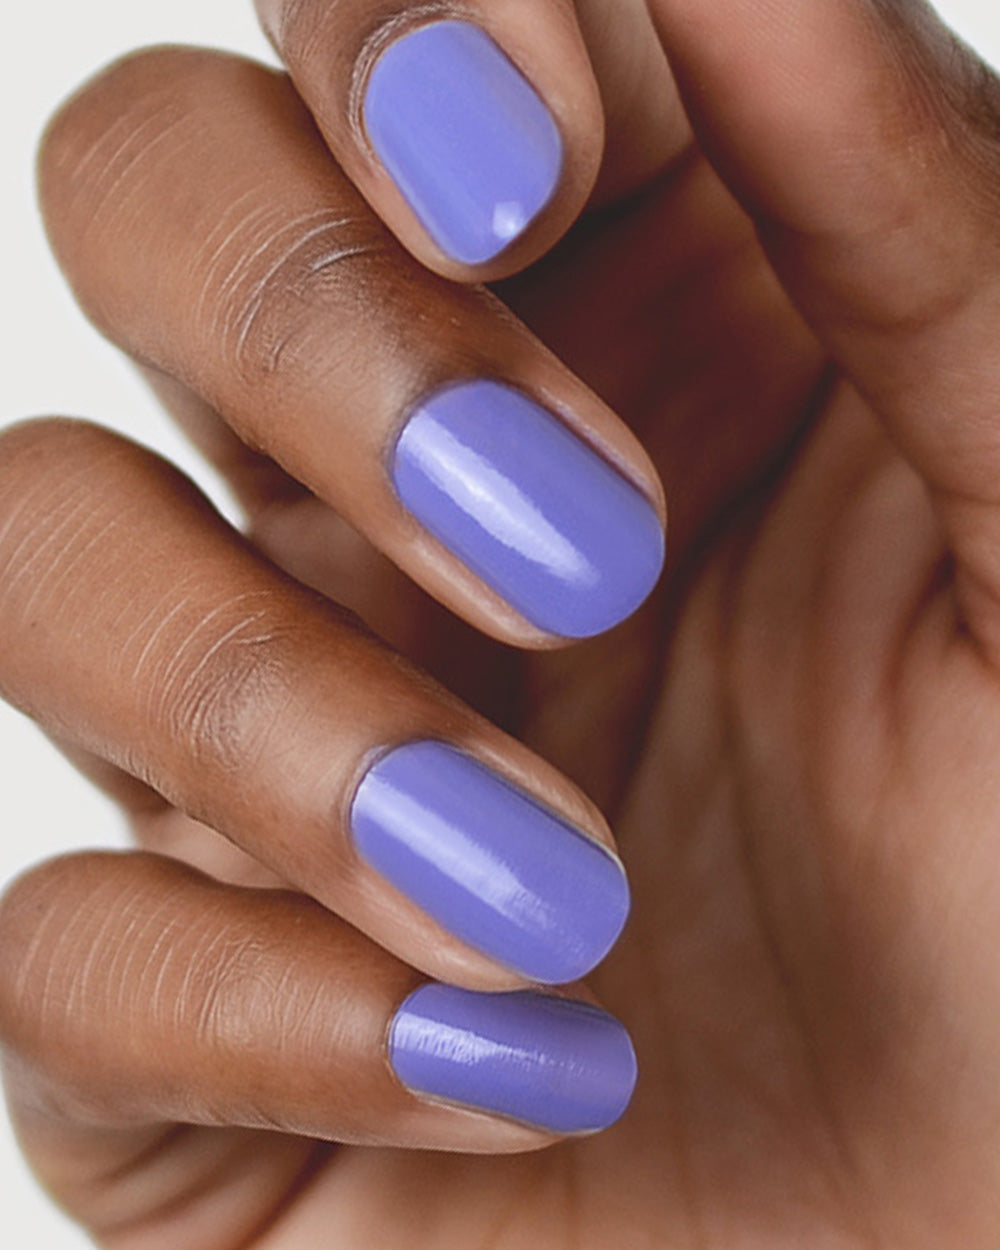 Gentle Midtone Blue Lilac Crème nail polish by Sienna Byron Bay on medium skin tone hand.